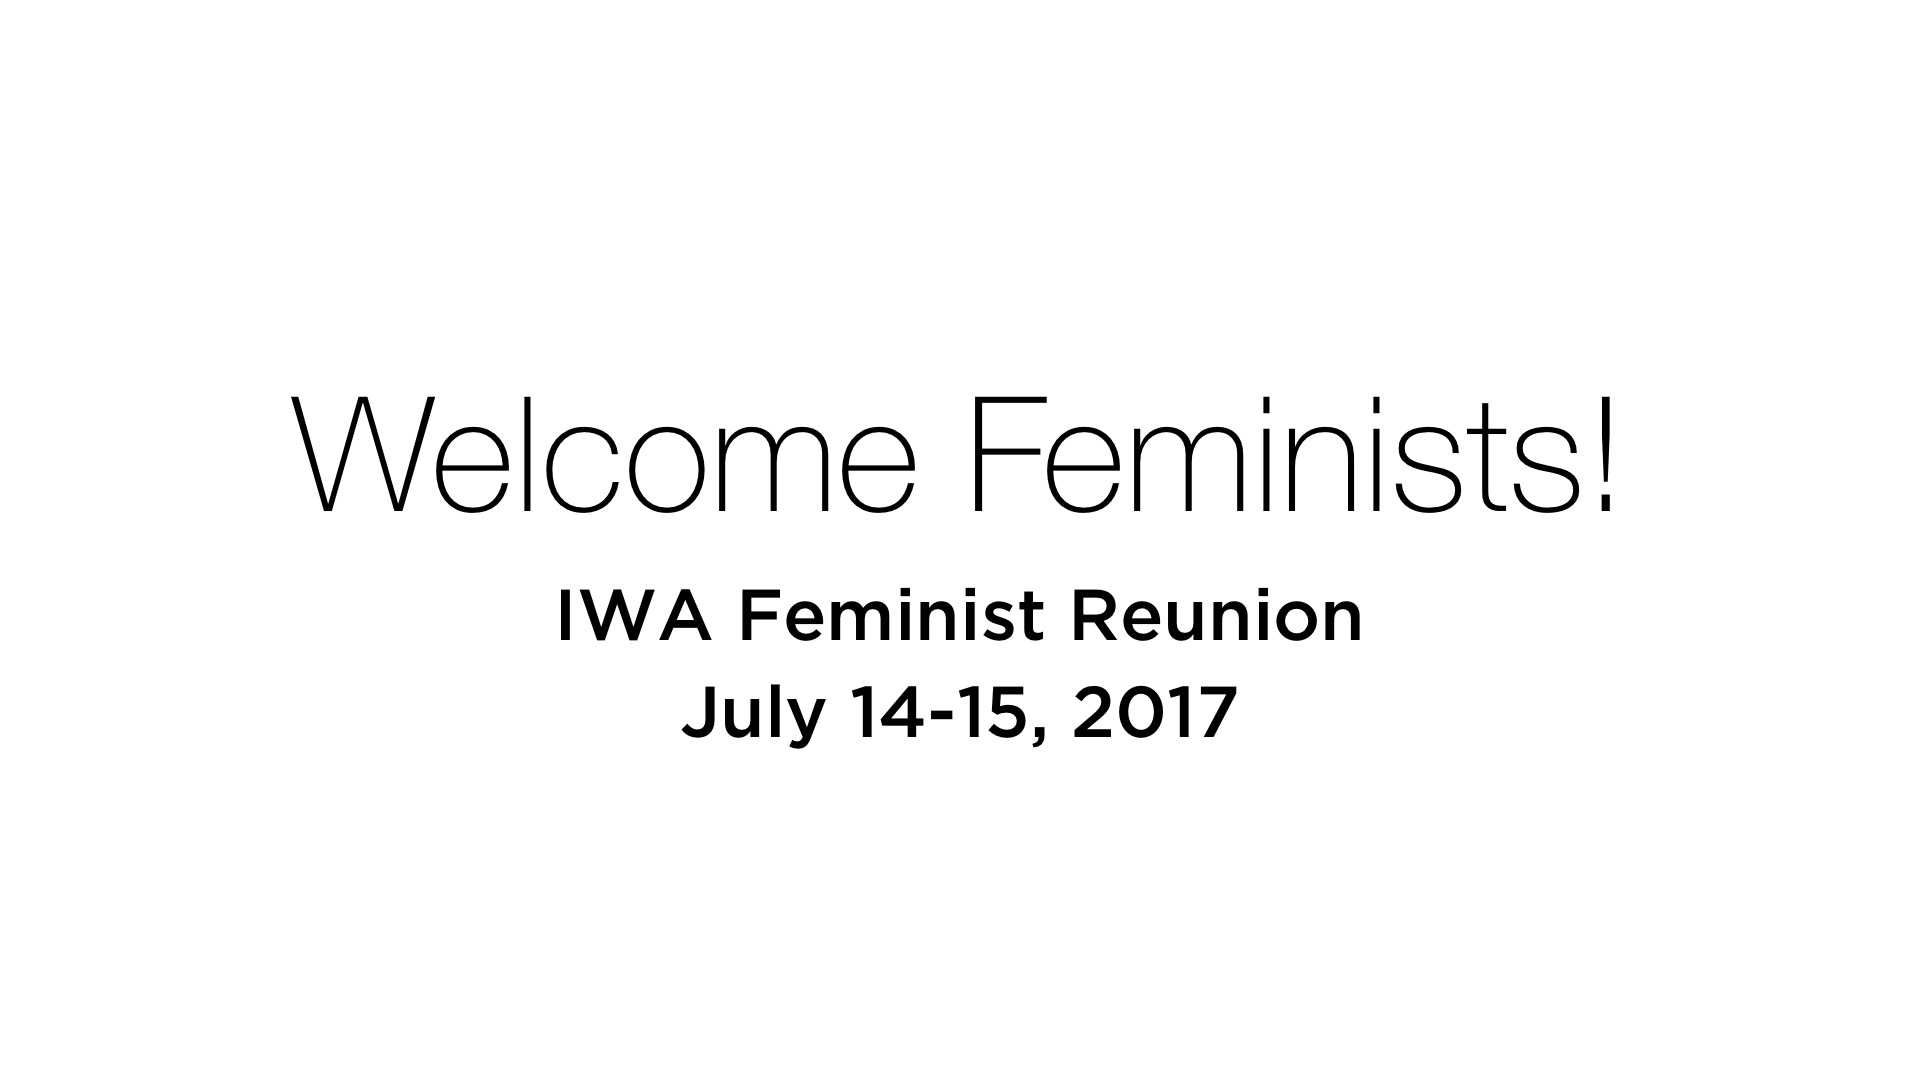 Welcome Feminists! IWA Feminist Reunion July 14-15, 2017